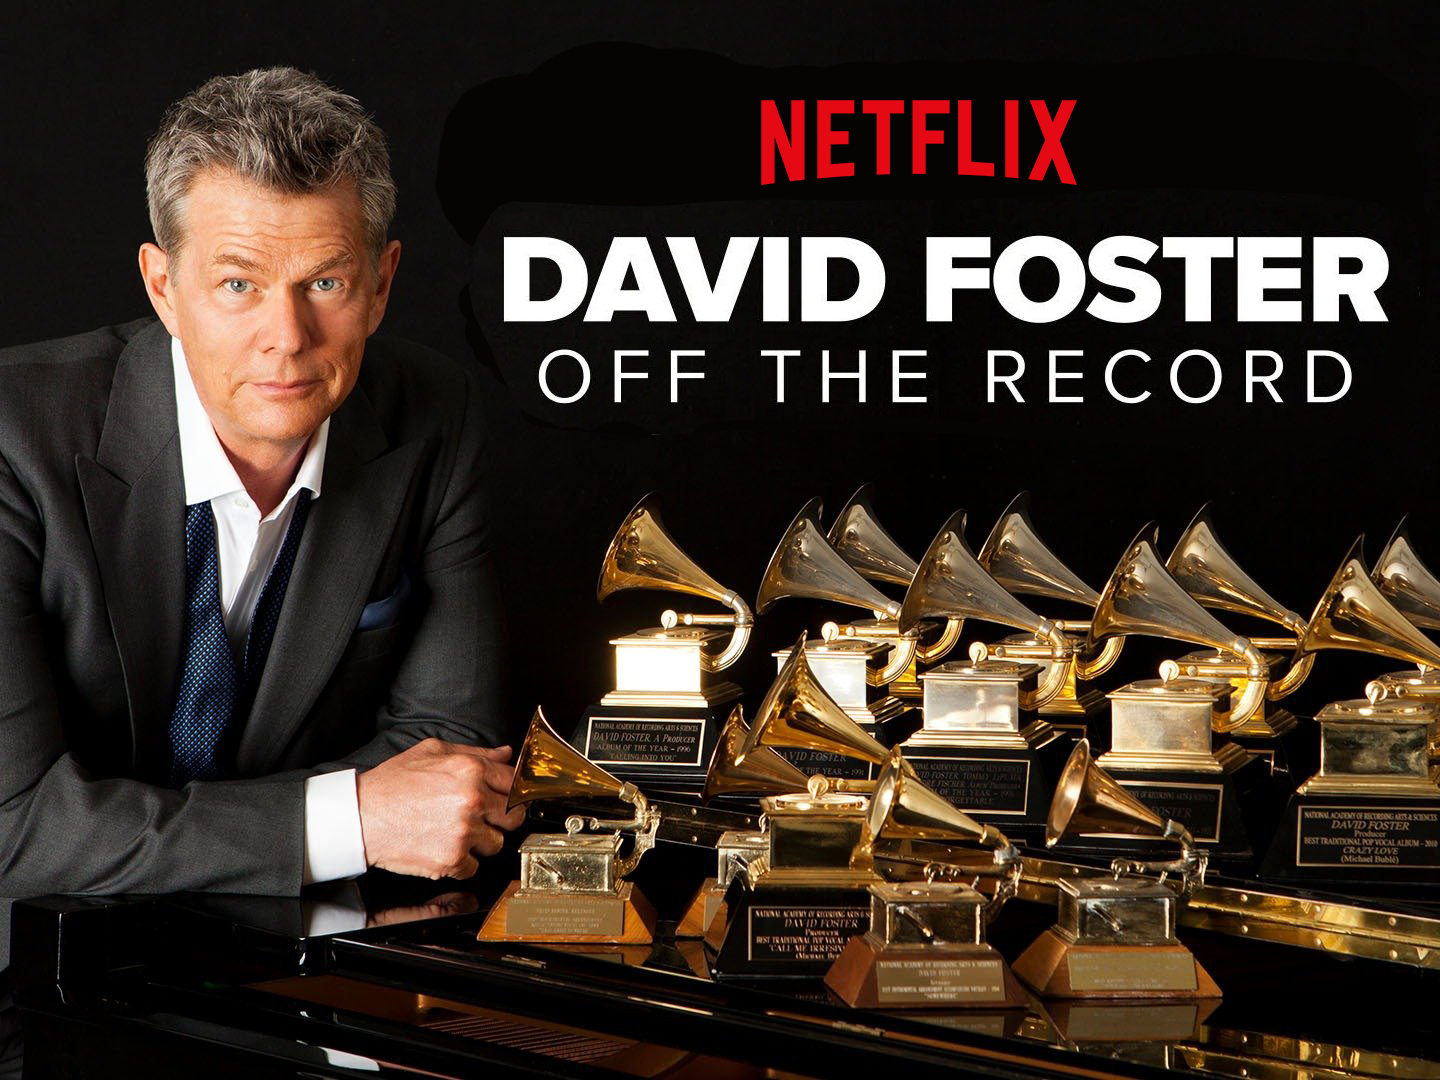 DAVID FOSTER Off the Record Netflix White Cross Management - Shot by Jim Jordan Photography